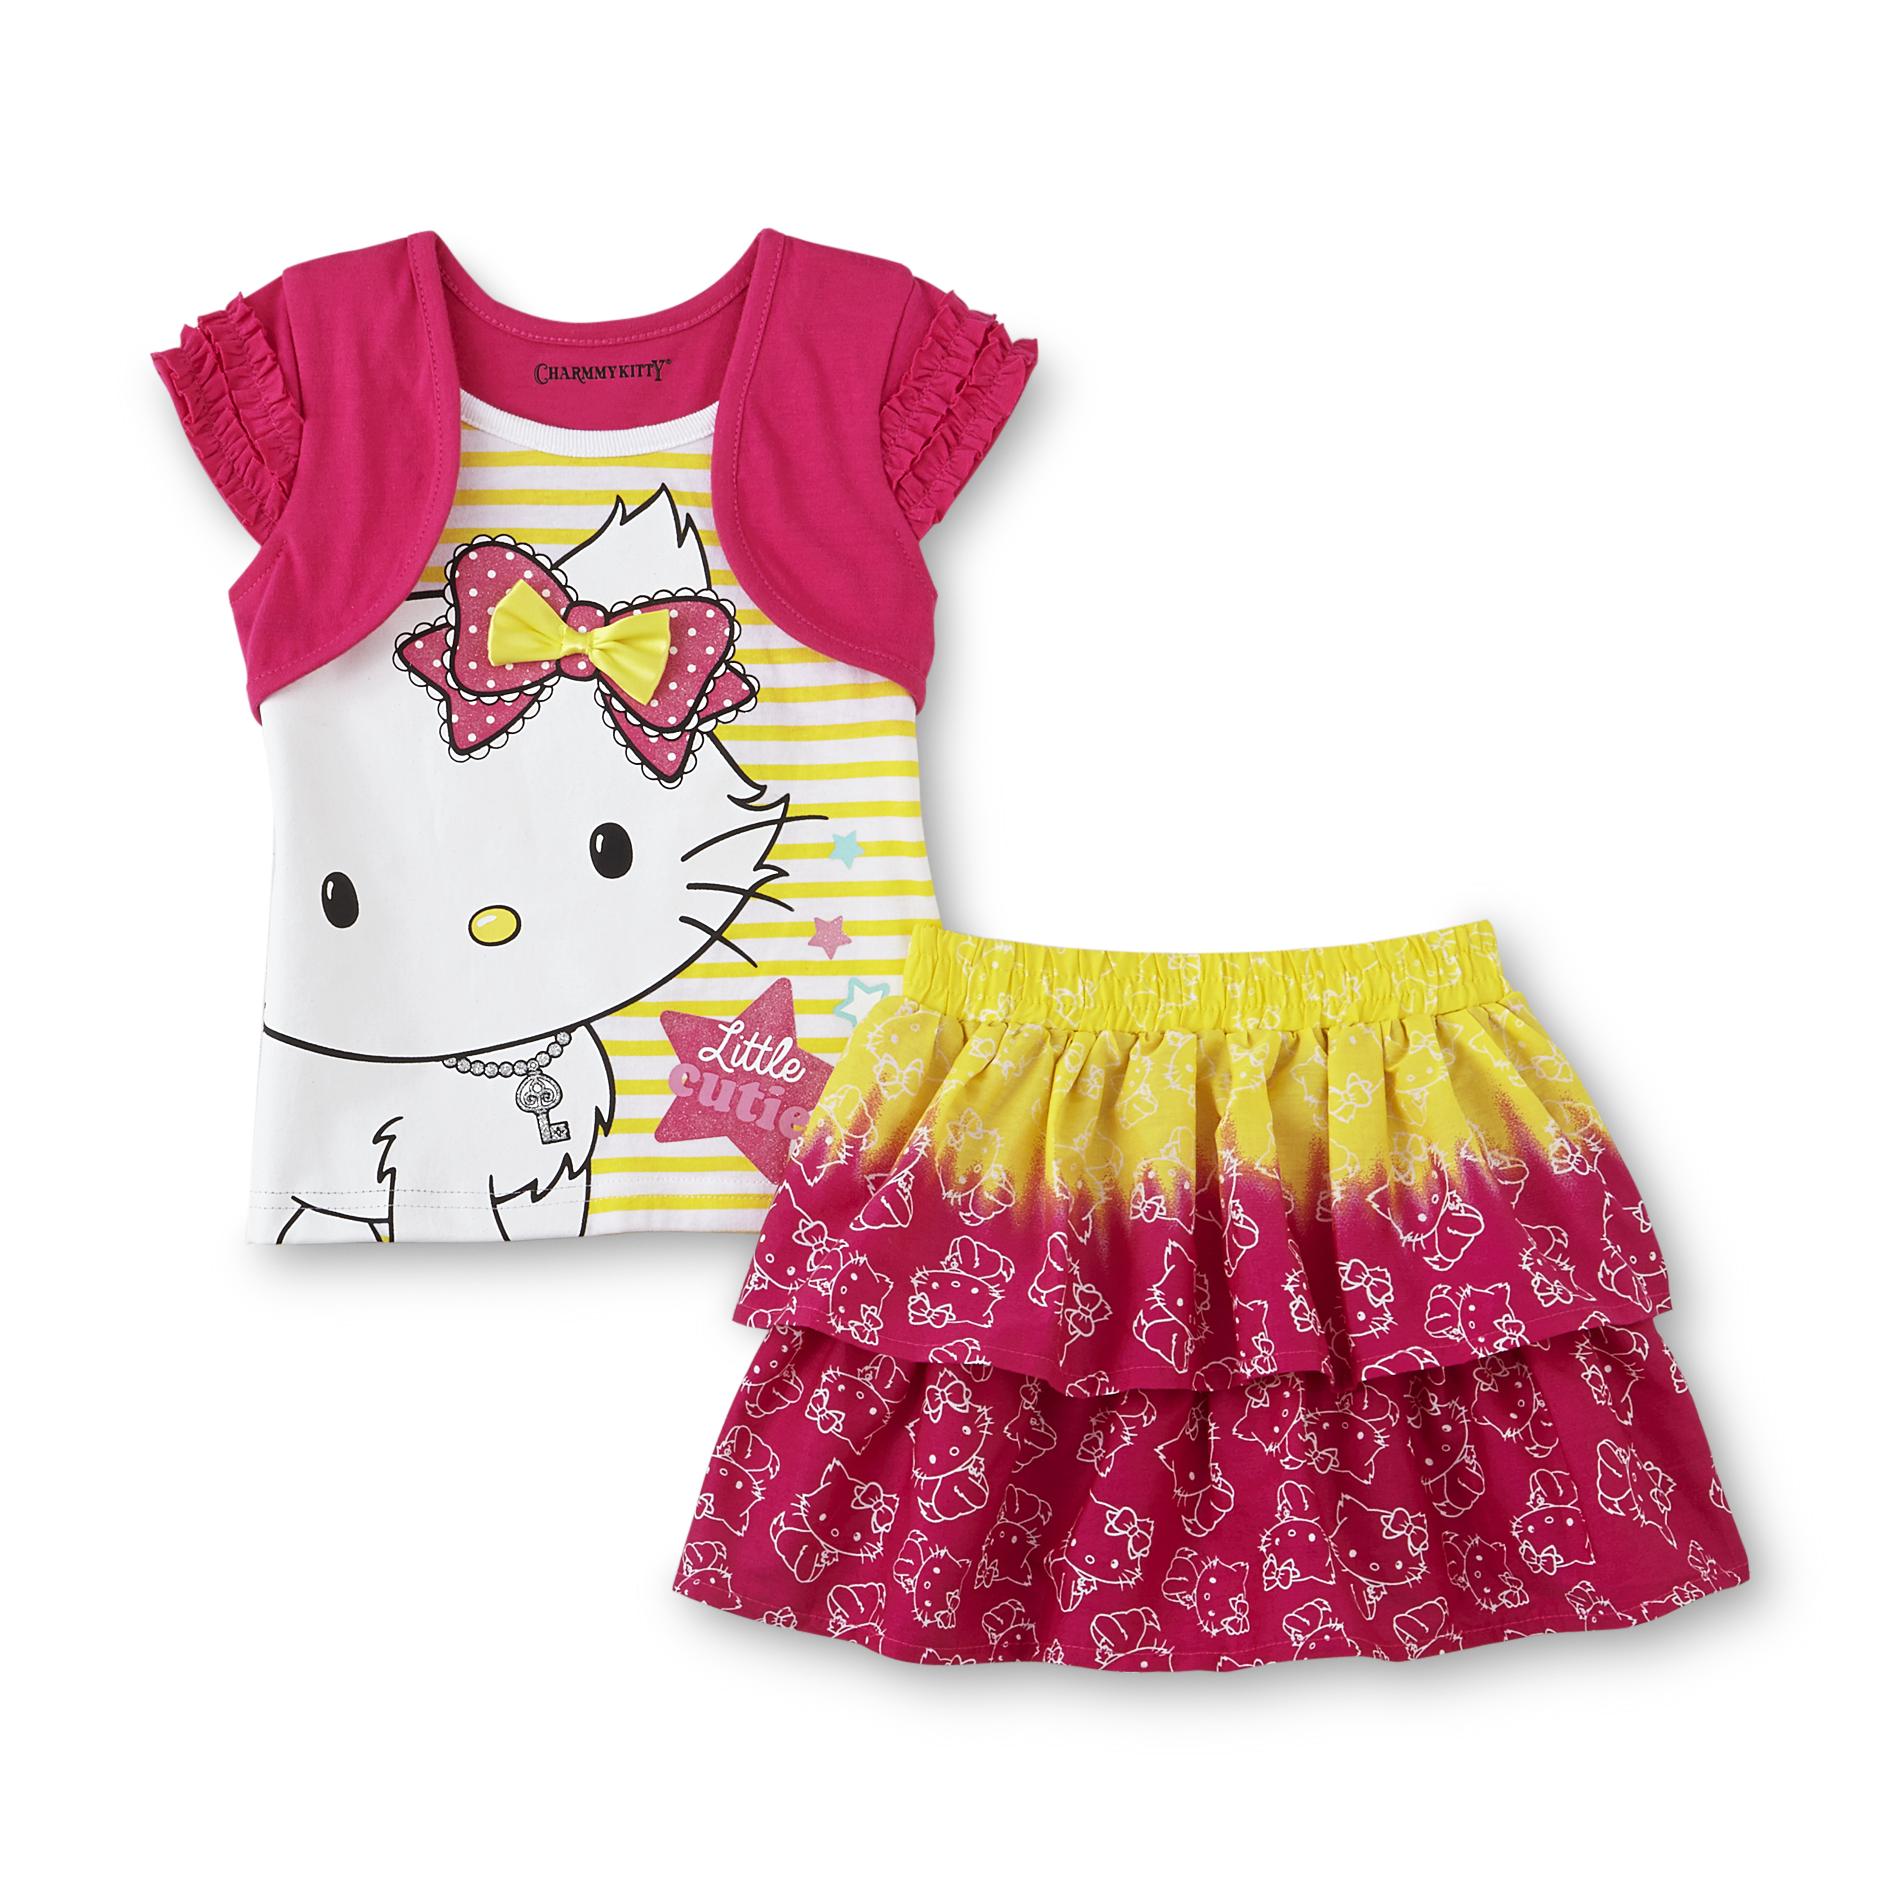 Sanrio Charmmykitty Infant & Toddler Girl's Layered-Look Top & Skirt